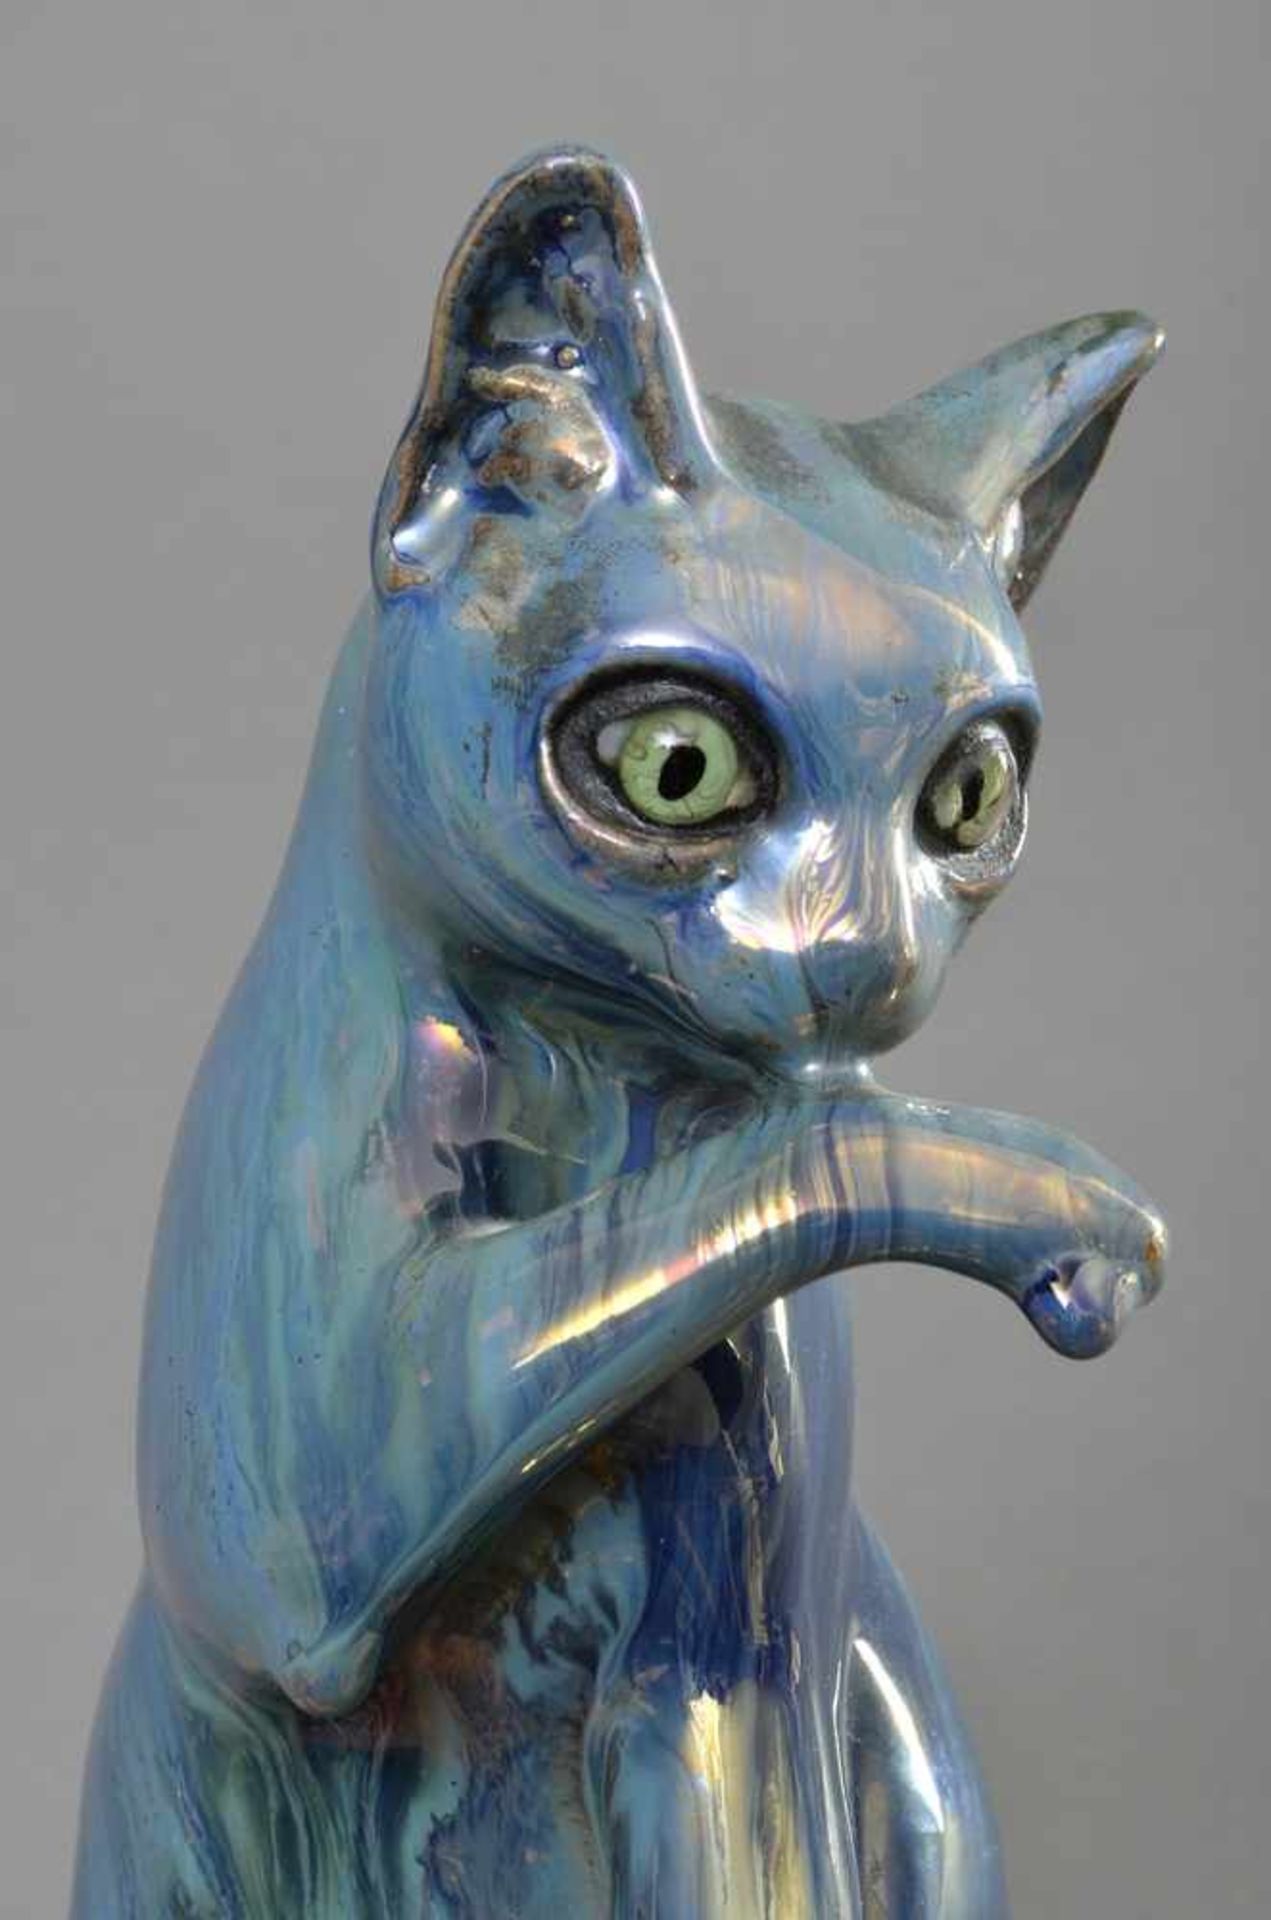 Keramik Figur "Sitzende Katze", blaue Lüsterglasur mit Glasaugen, Herst.: "Gres de Rambervillers", - Bild 4 aus 5